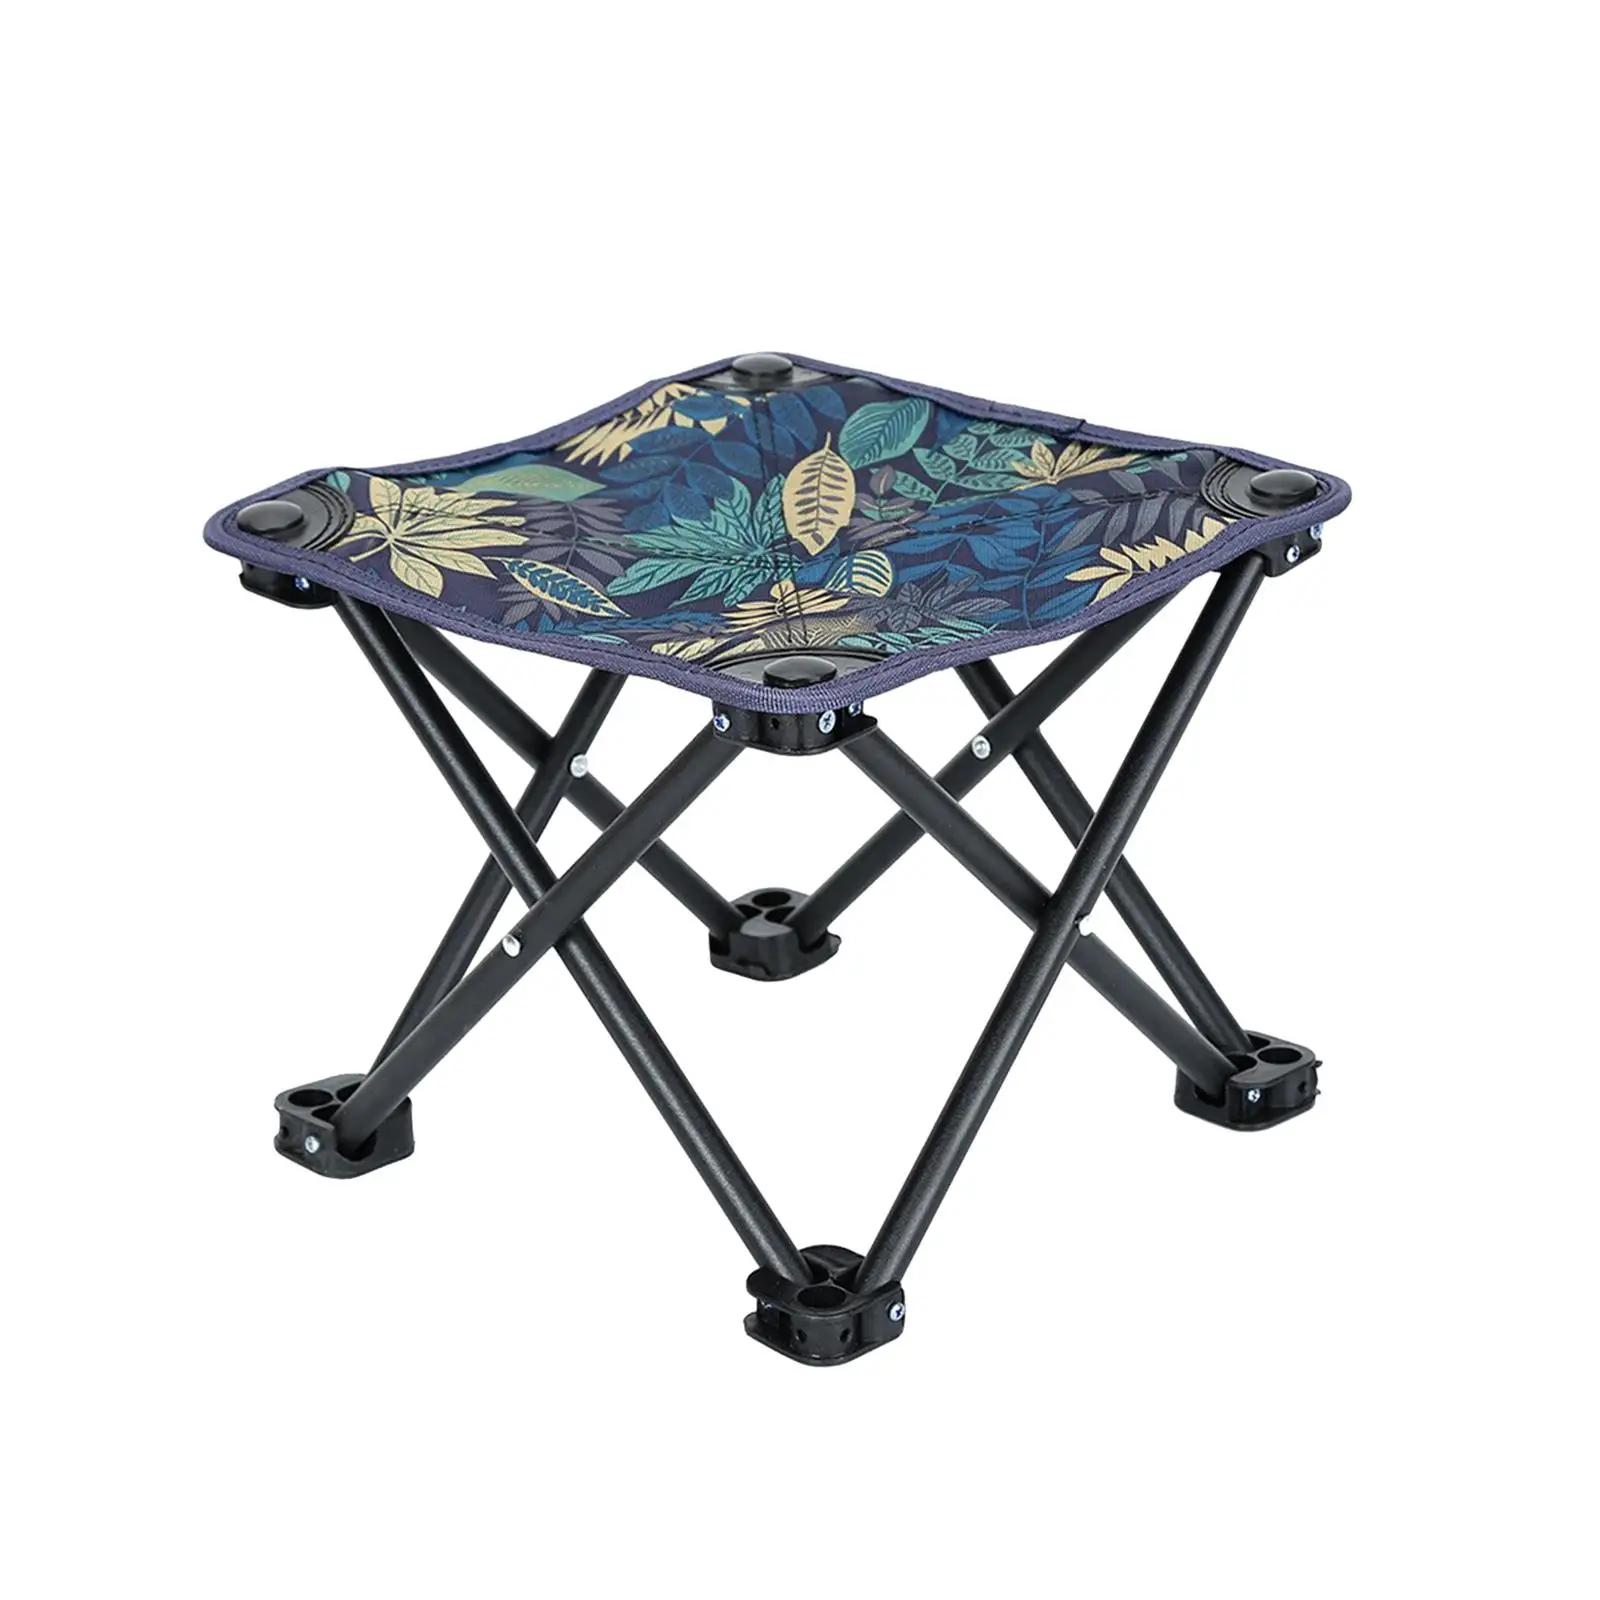 Folding Stool Practical Reusable Portable Wear Resistant Anti Slip Camping Stool Chair for Garden Picnics Fishing Backyard Patio